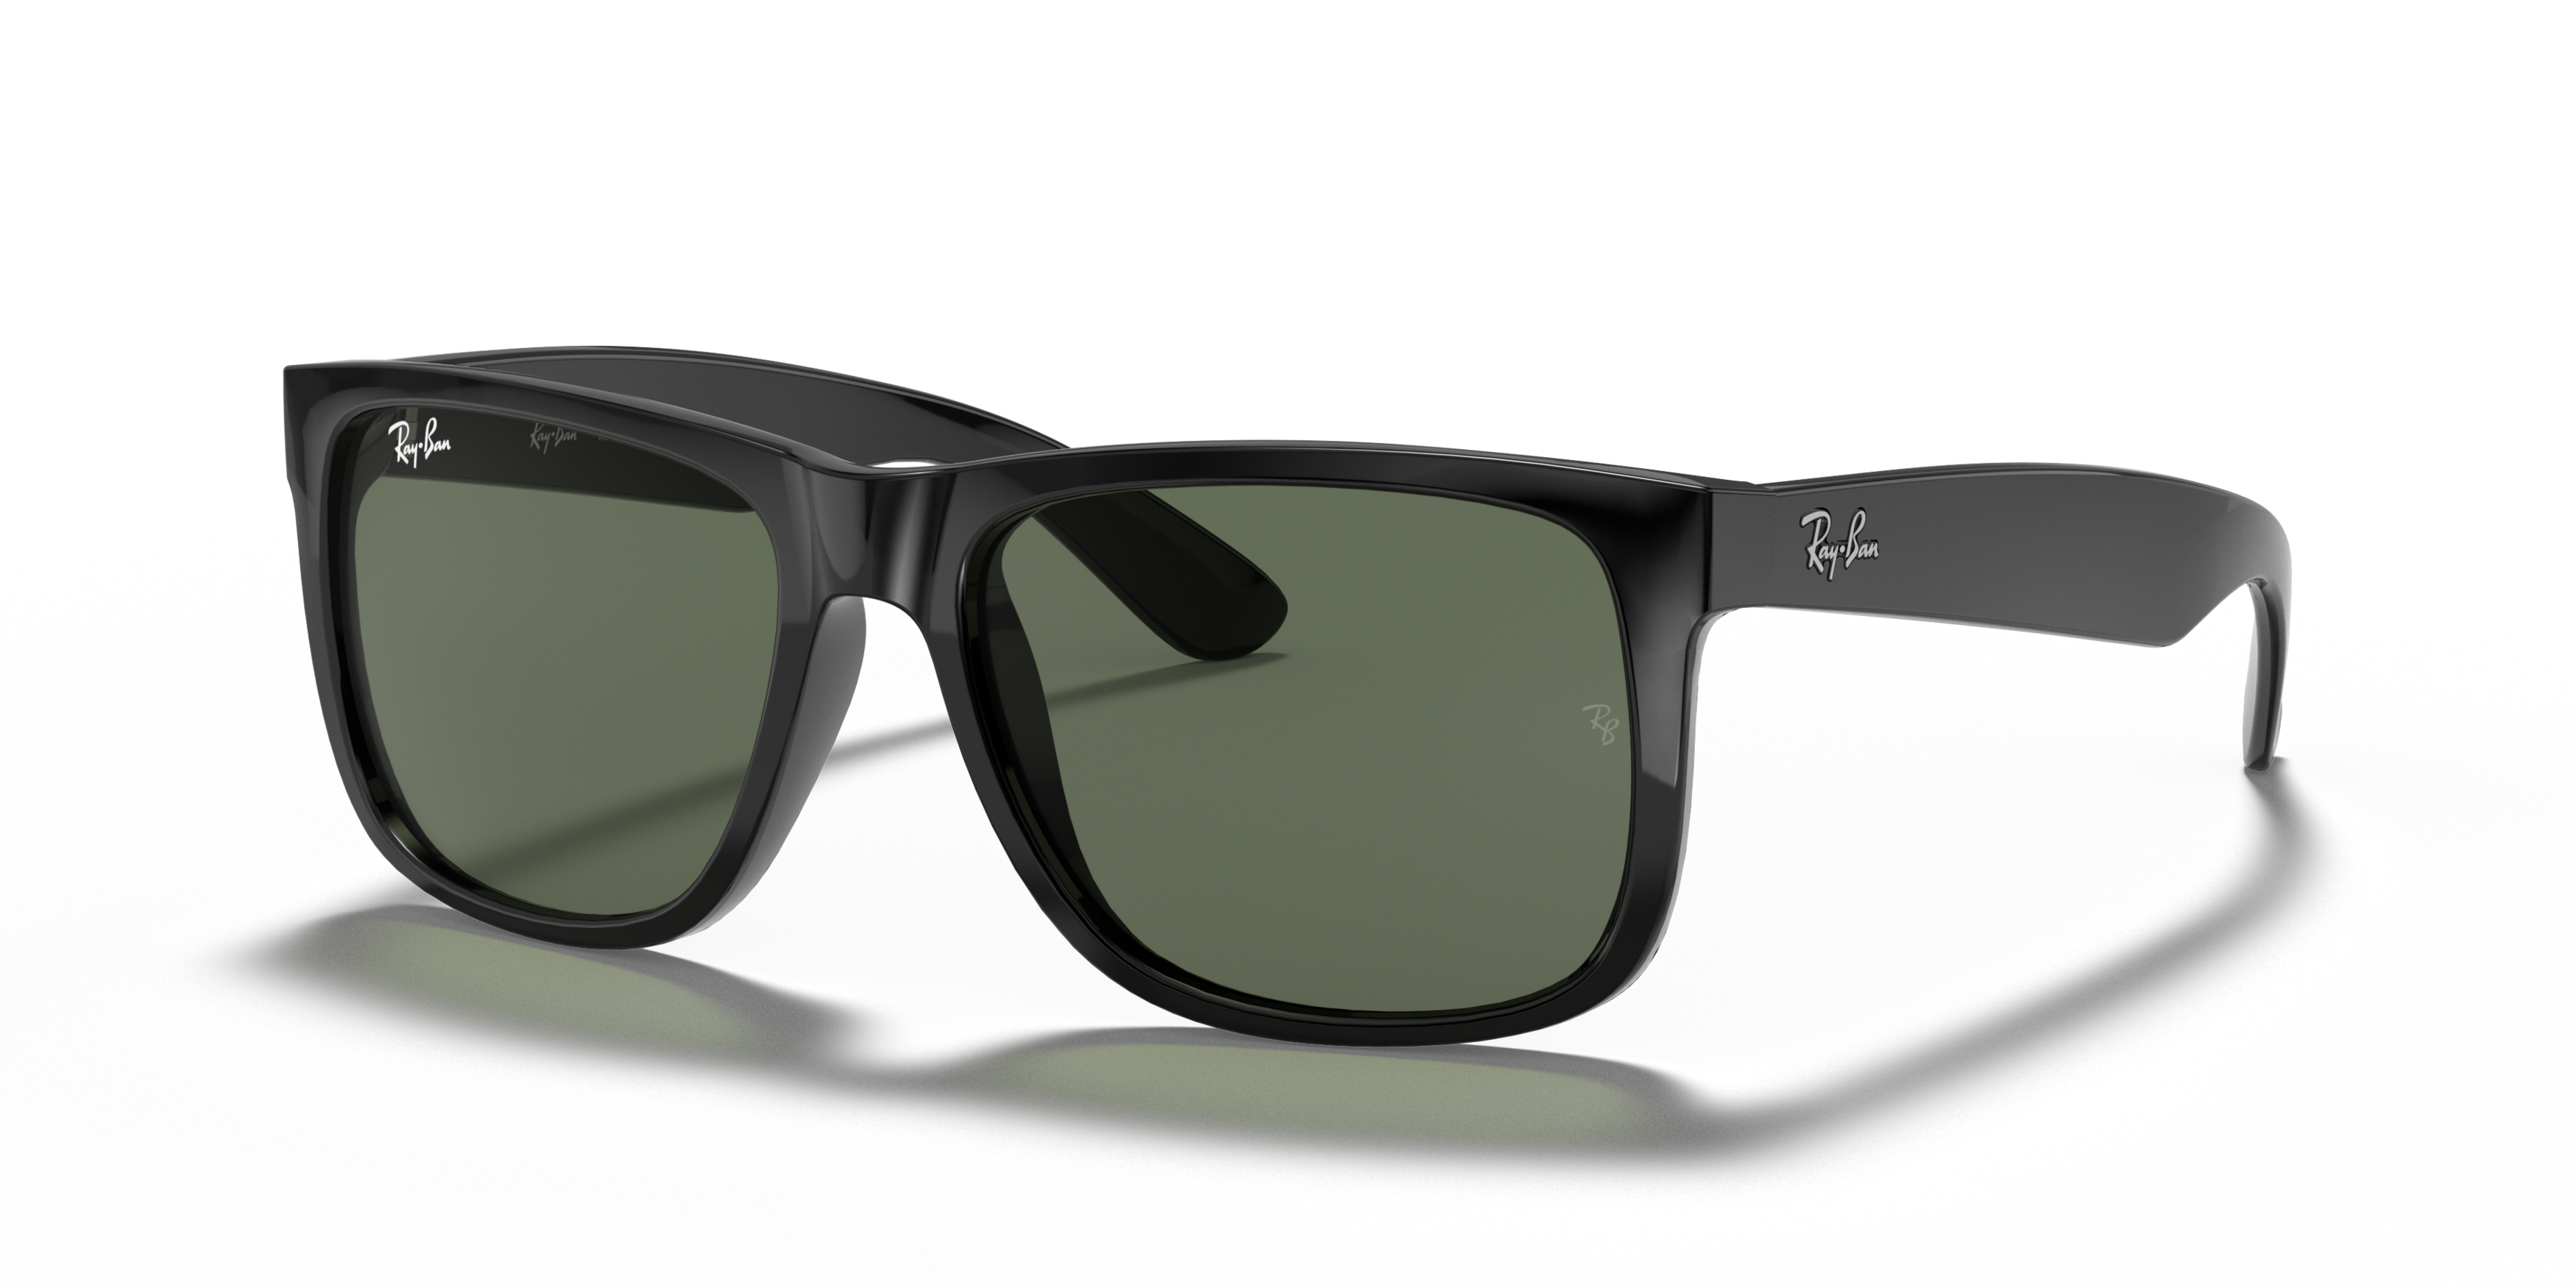 Angle_Left01 Ray-Ban Justin RB 4165 (601/71) Sunglasses Green / Black